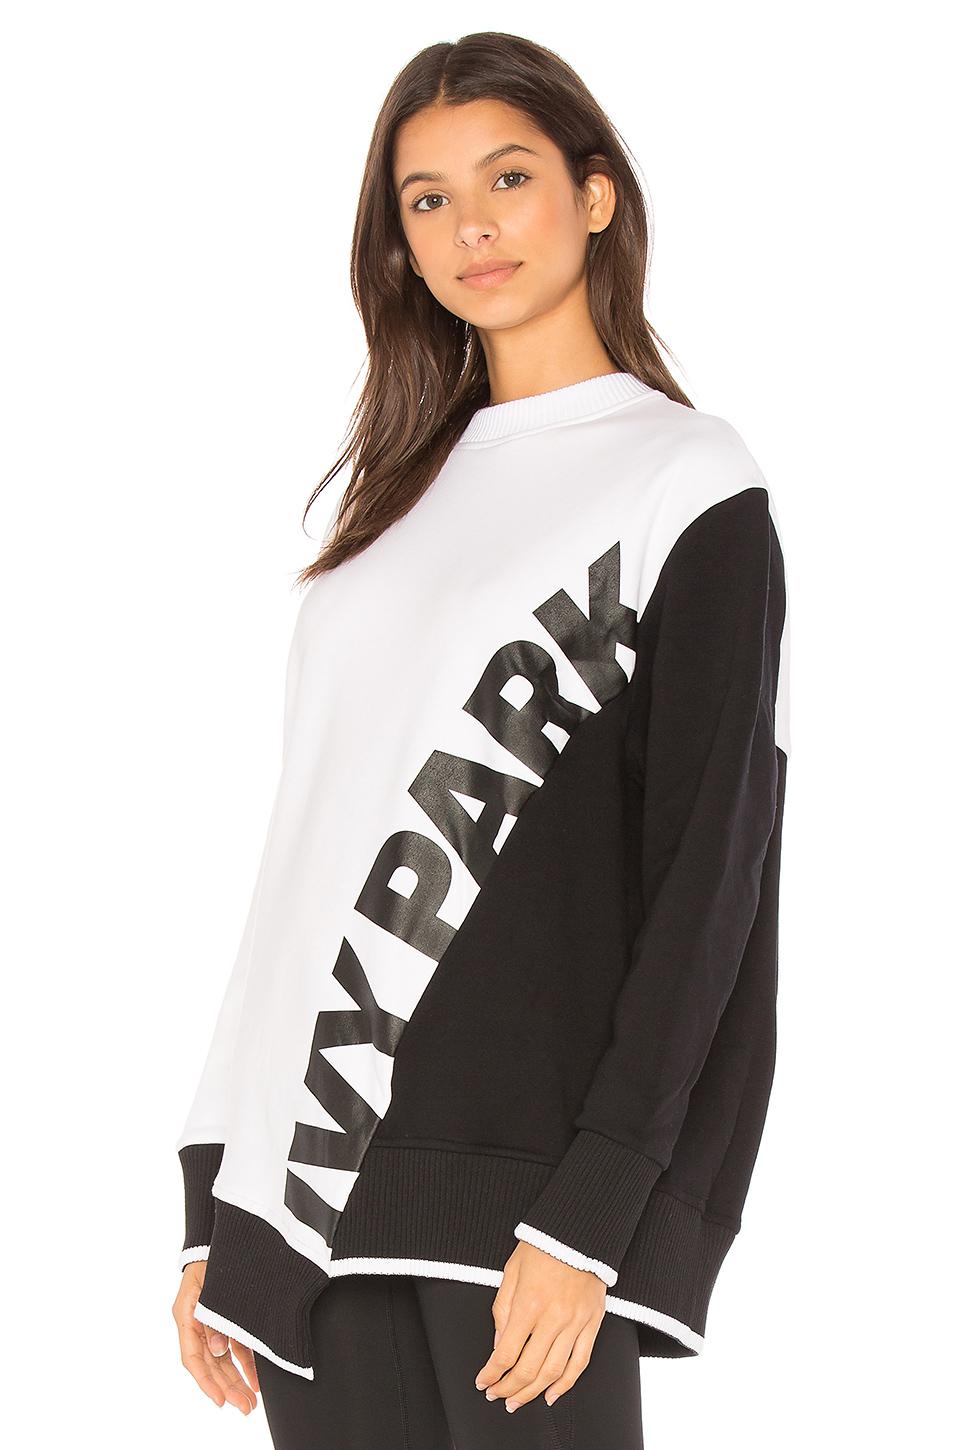 Ivy Park Cotton Colorblock Sweatshirt in Black & White (Black) | Lyst